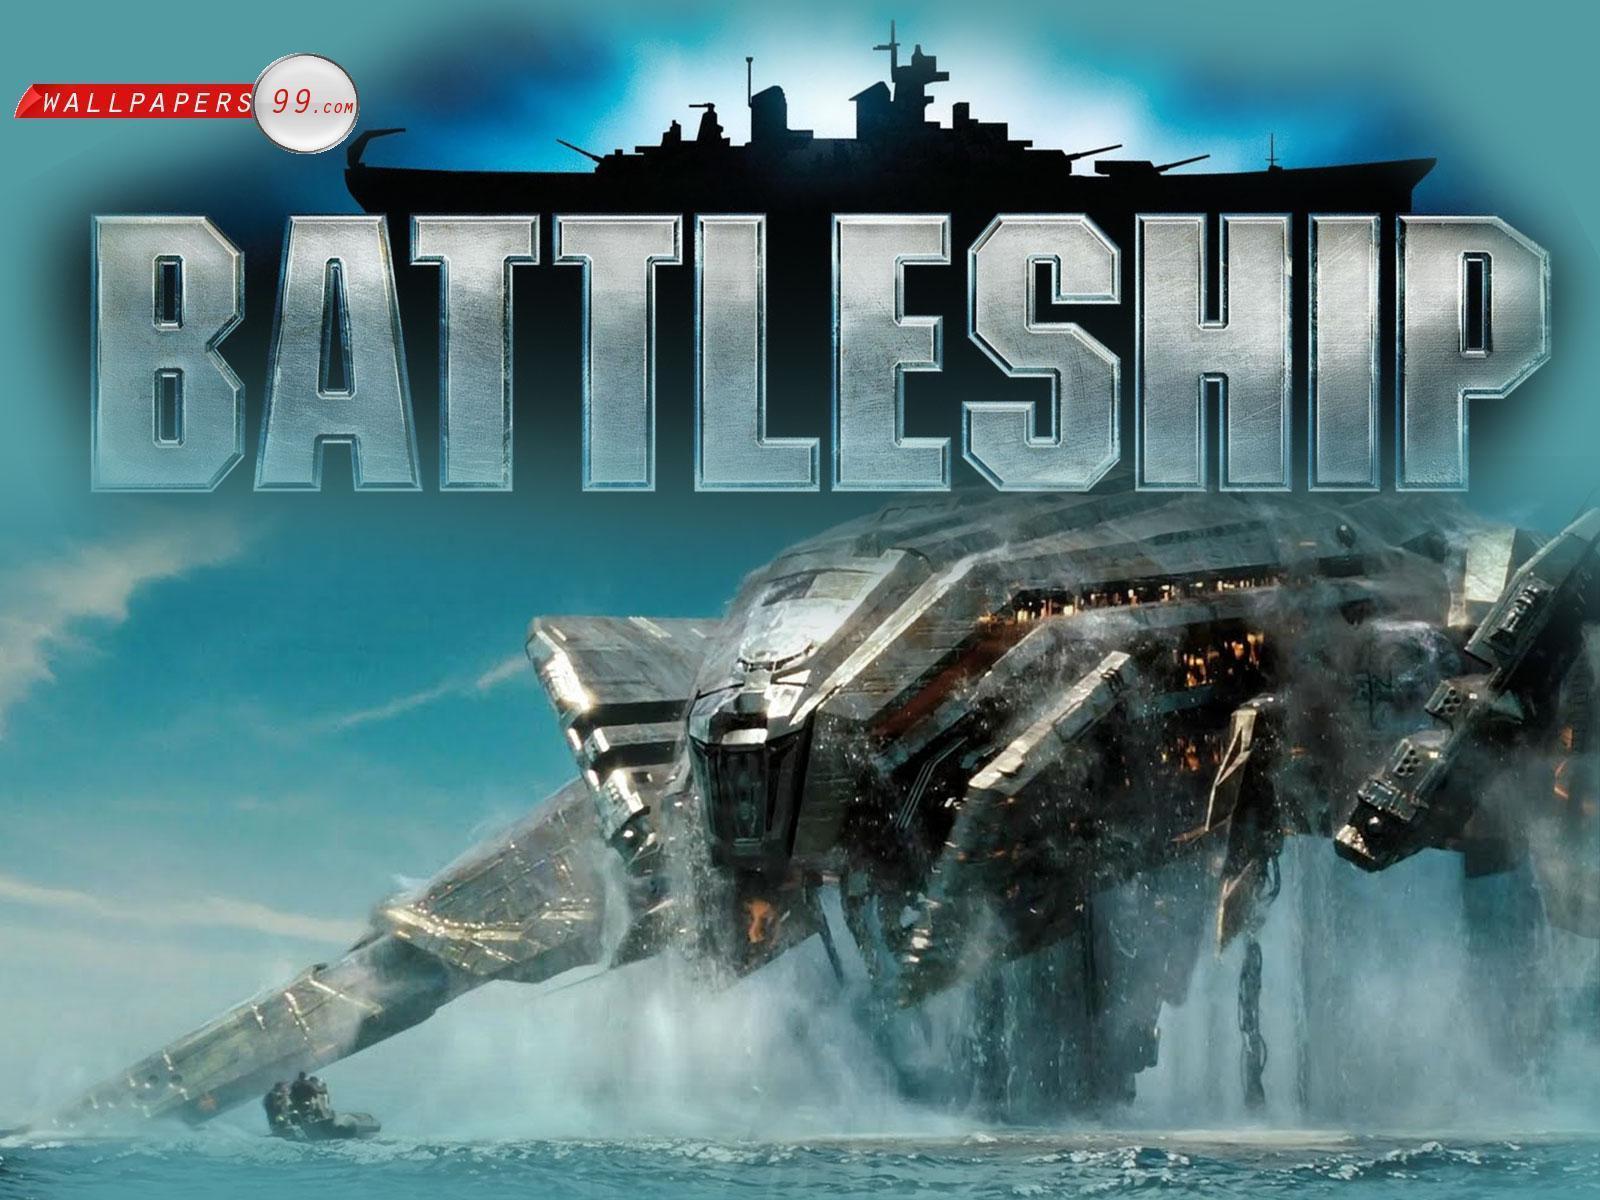 Battleship Wallpaper Picture Image 1600x1200 36195